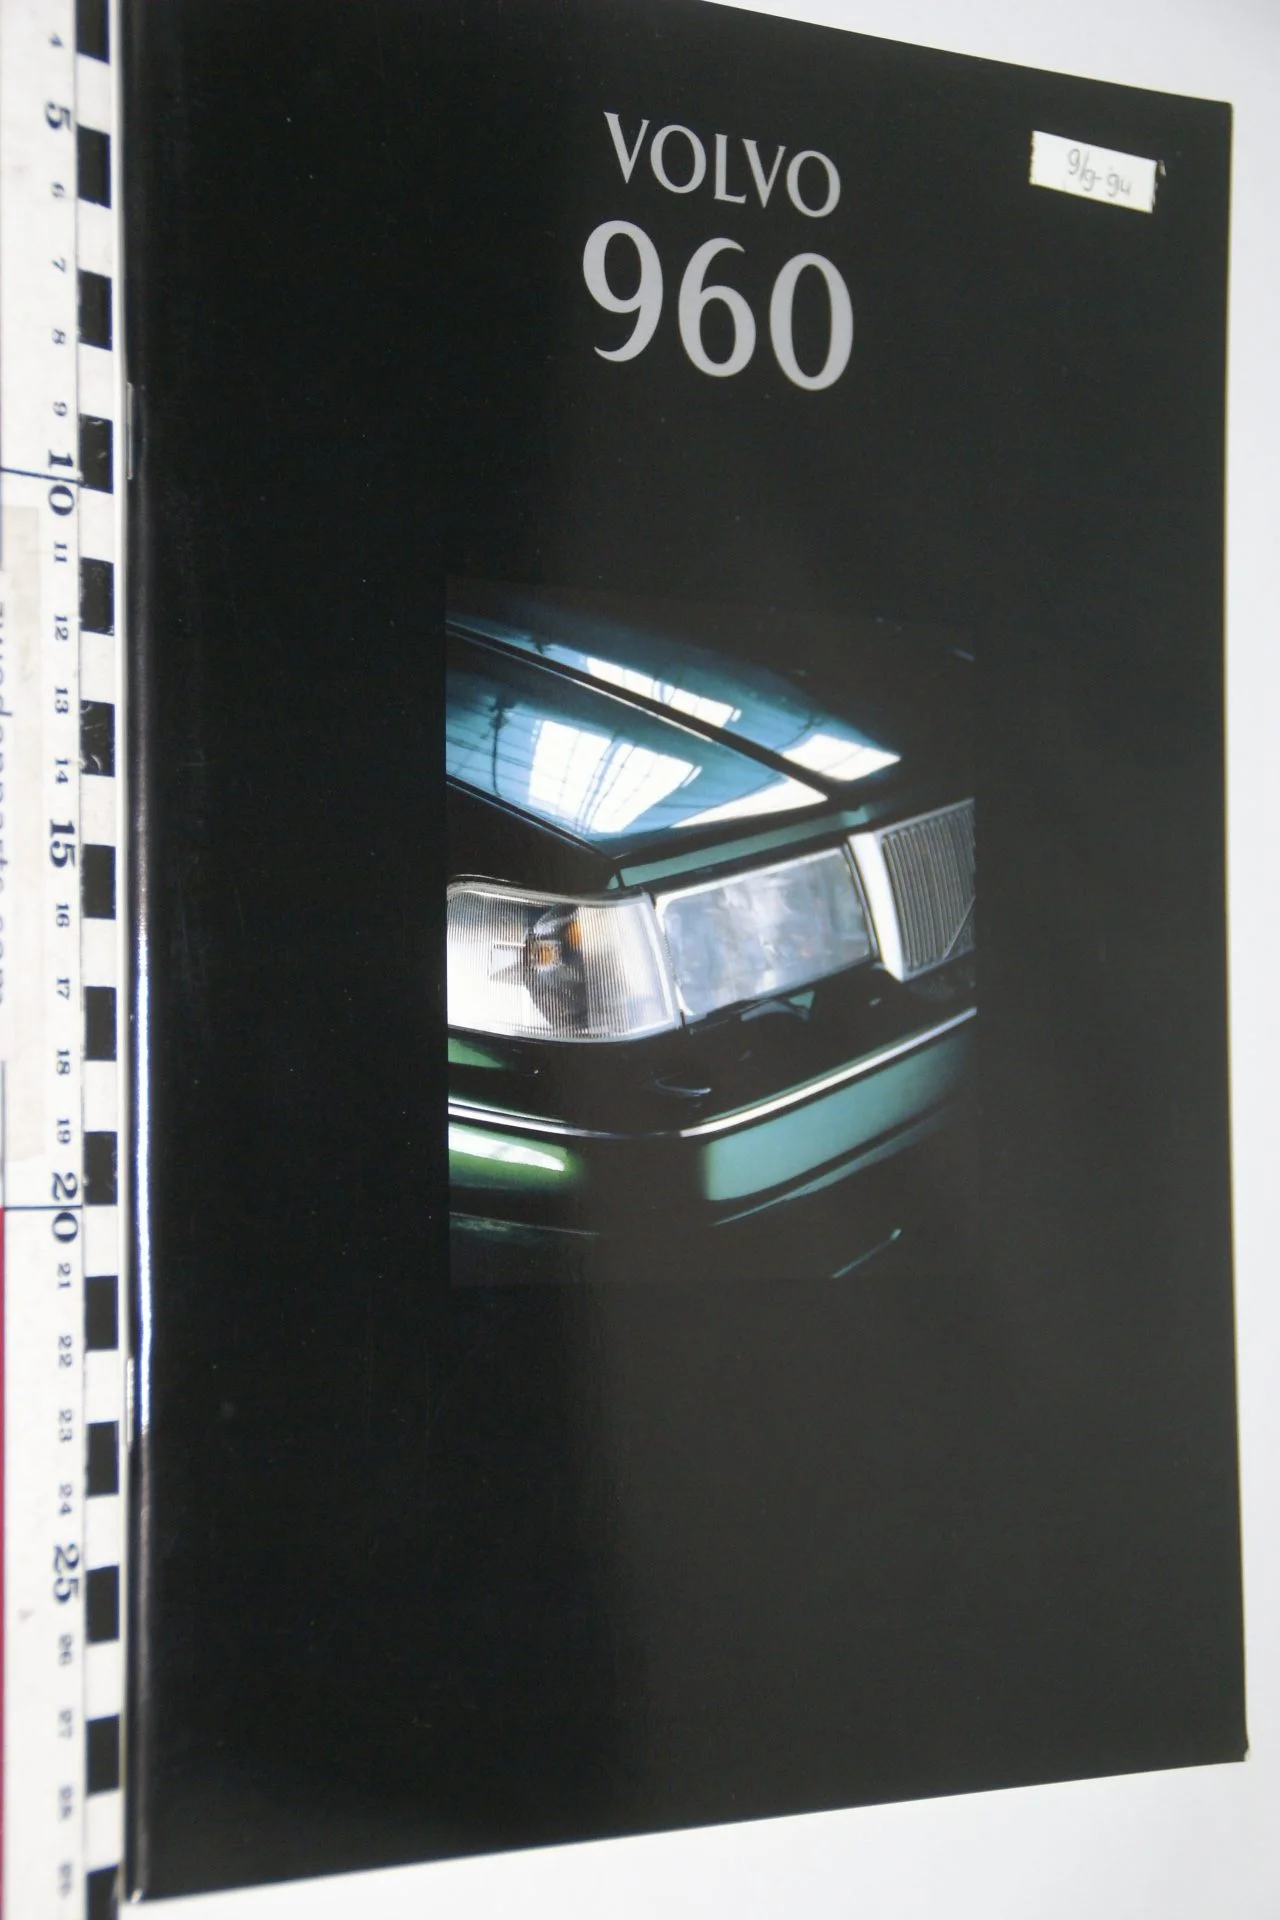 DSC03932 1995 brochure Volvo 960 MSPV6575 rotated